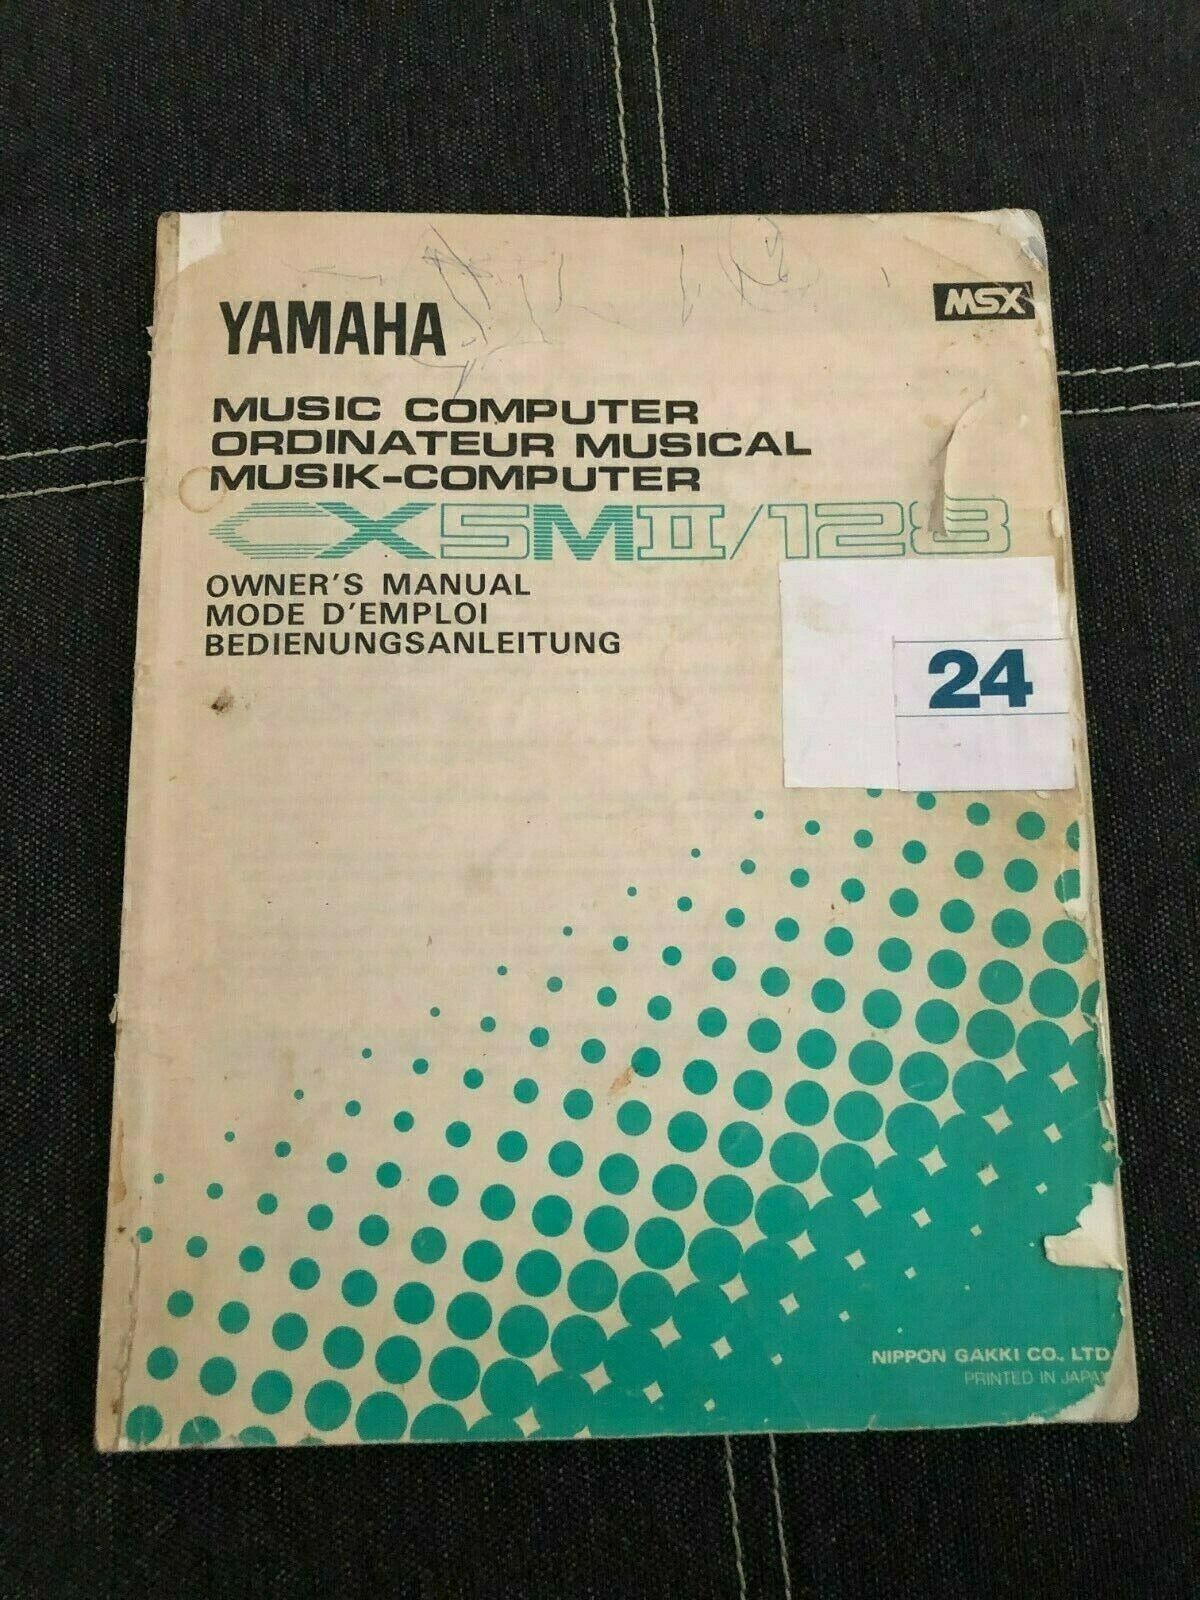  Yamaha CX5MII 128 Music Computer MSX - manual